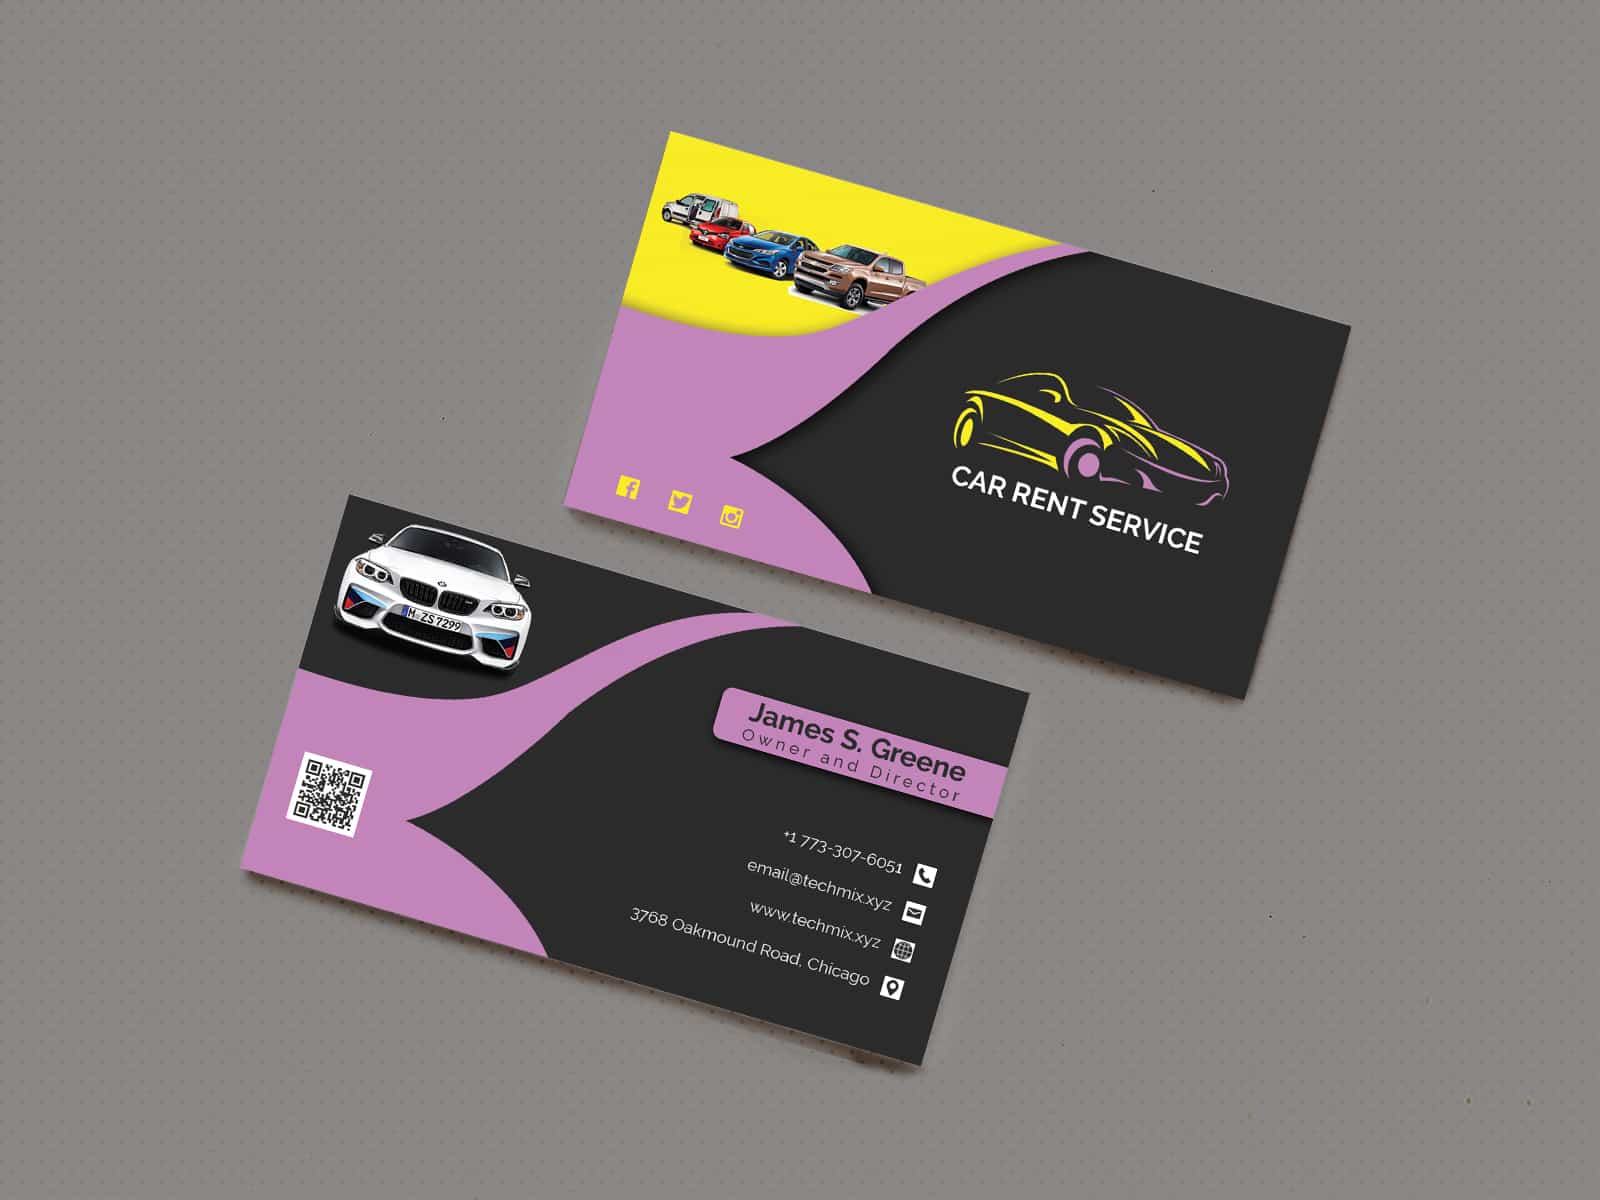 Rent a Car Business Card Design Template